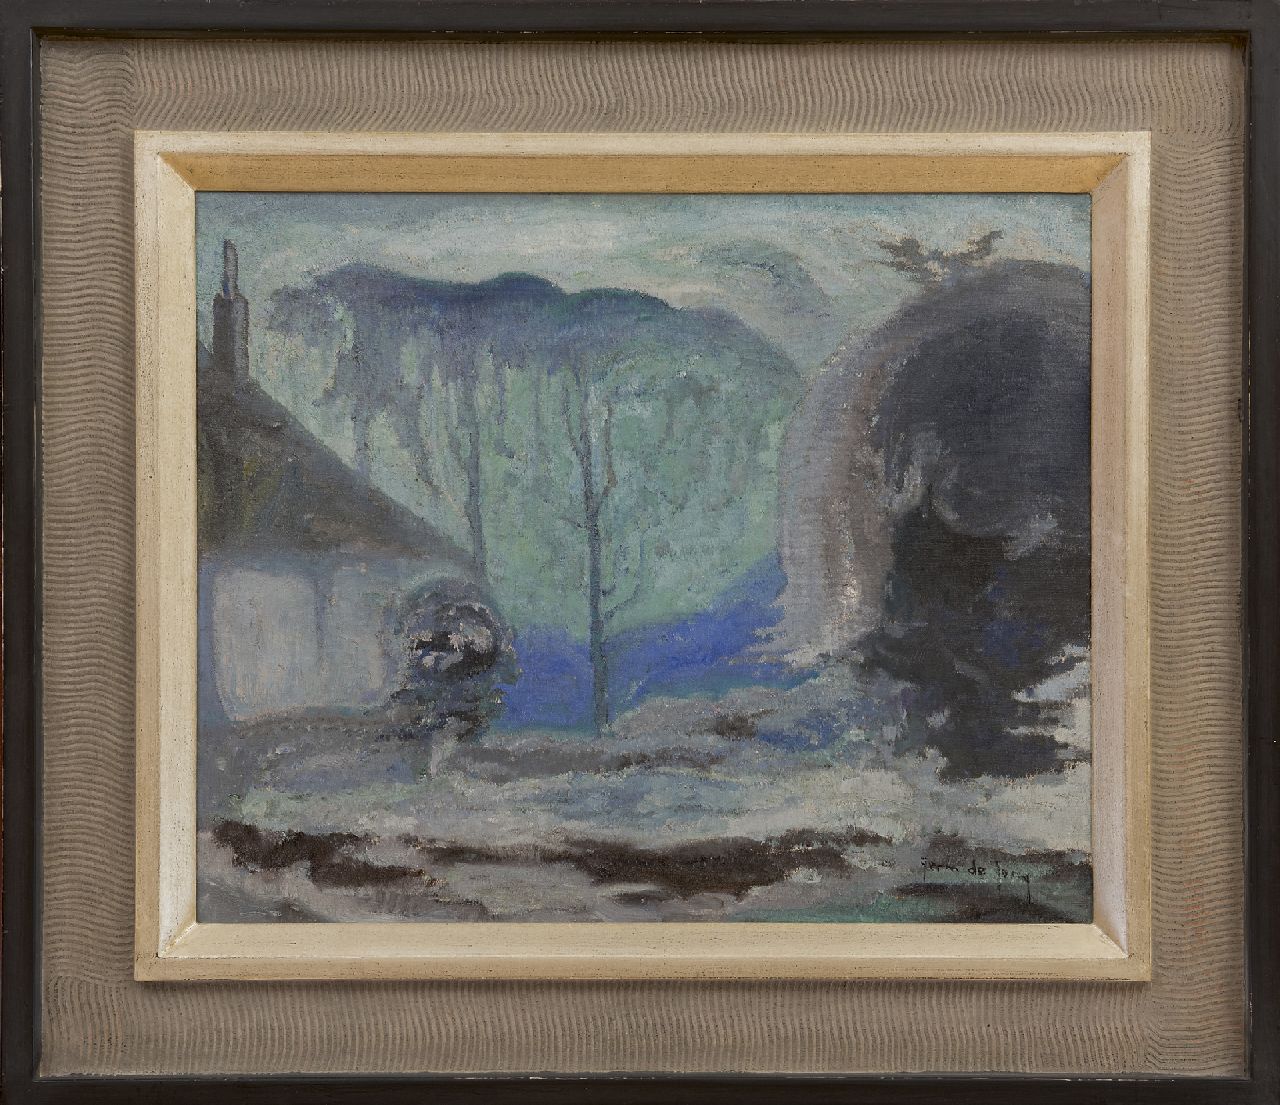 Jong G. de | Gerben 'Germ' de Jong | Gemälde zum Verkauf angeboten | Winterlandschaft, Öl auf Leinwand 41,2 x 50,0 cm, Unterzeichnet r.u. und zu datieren um 1918